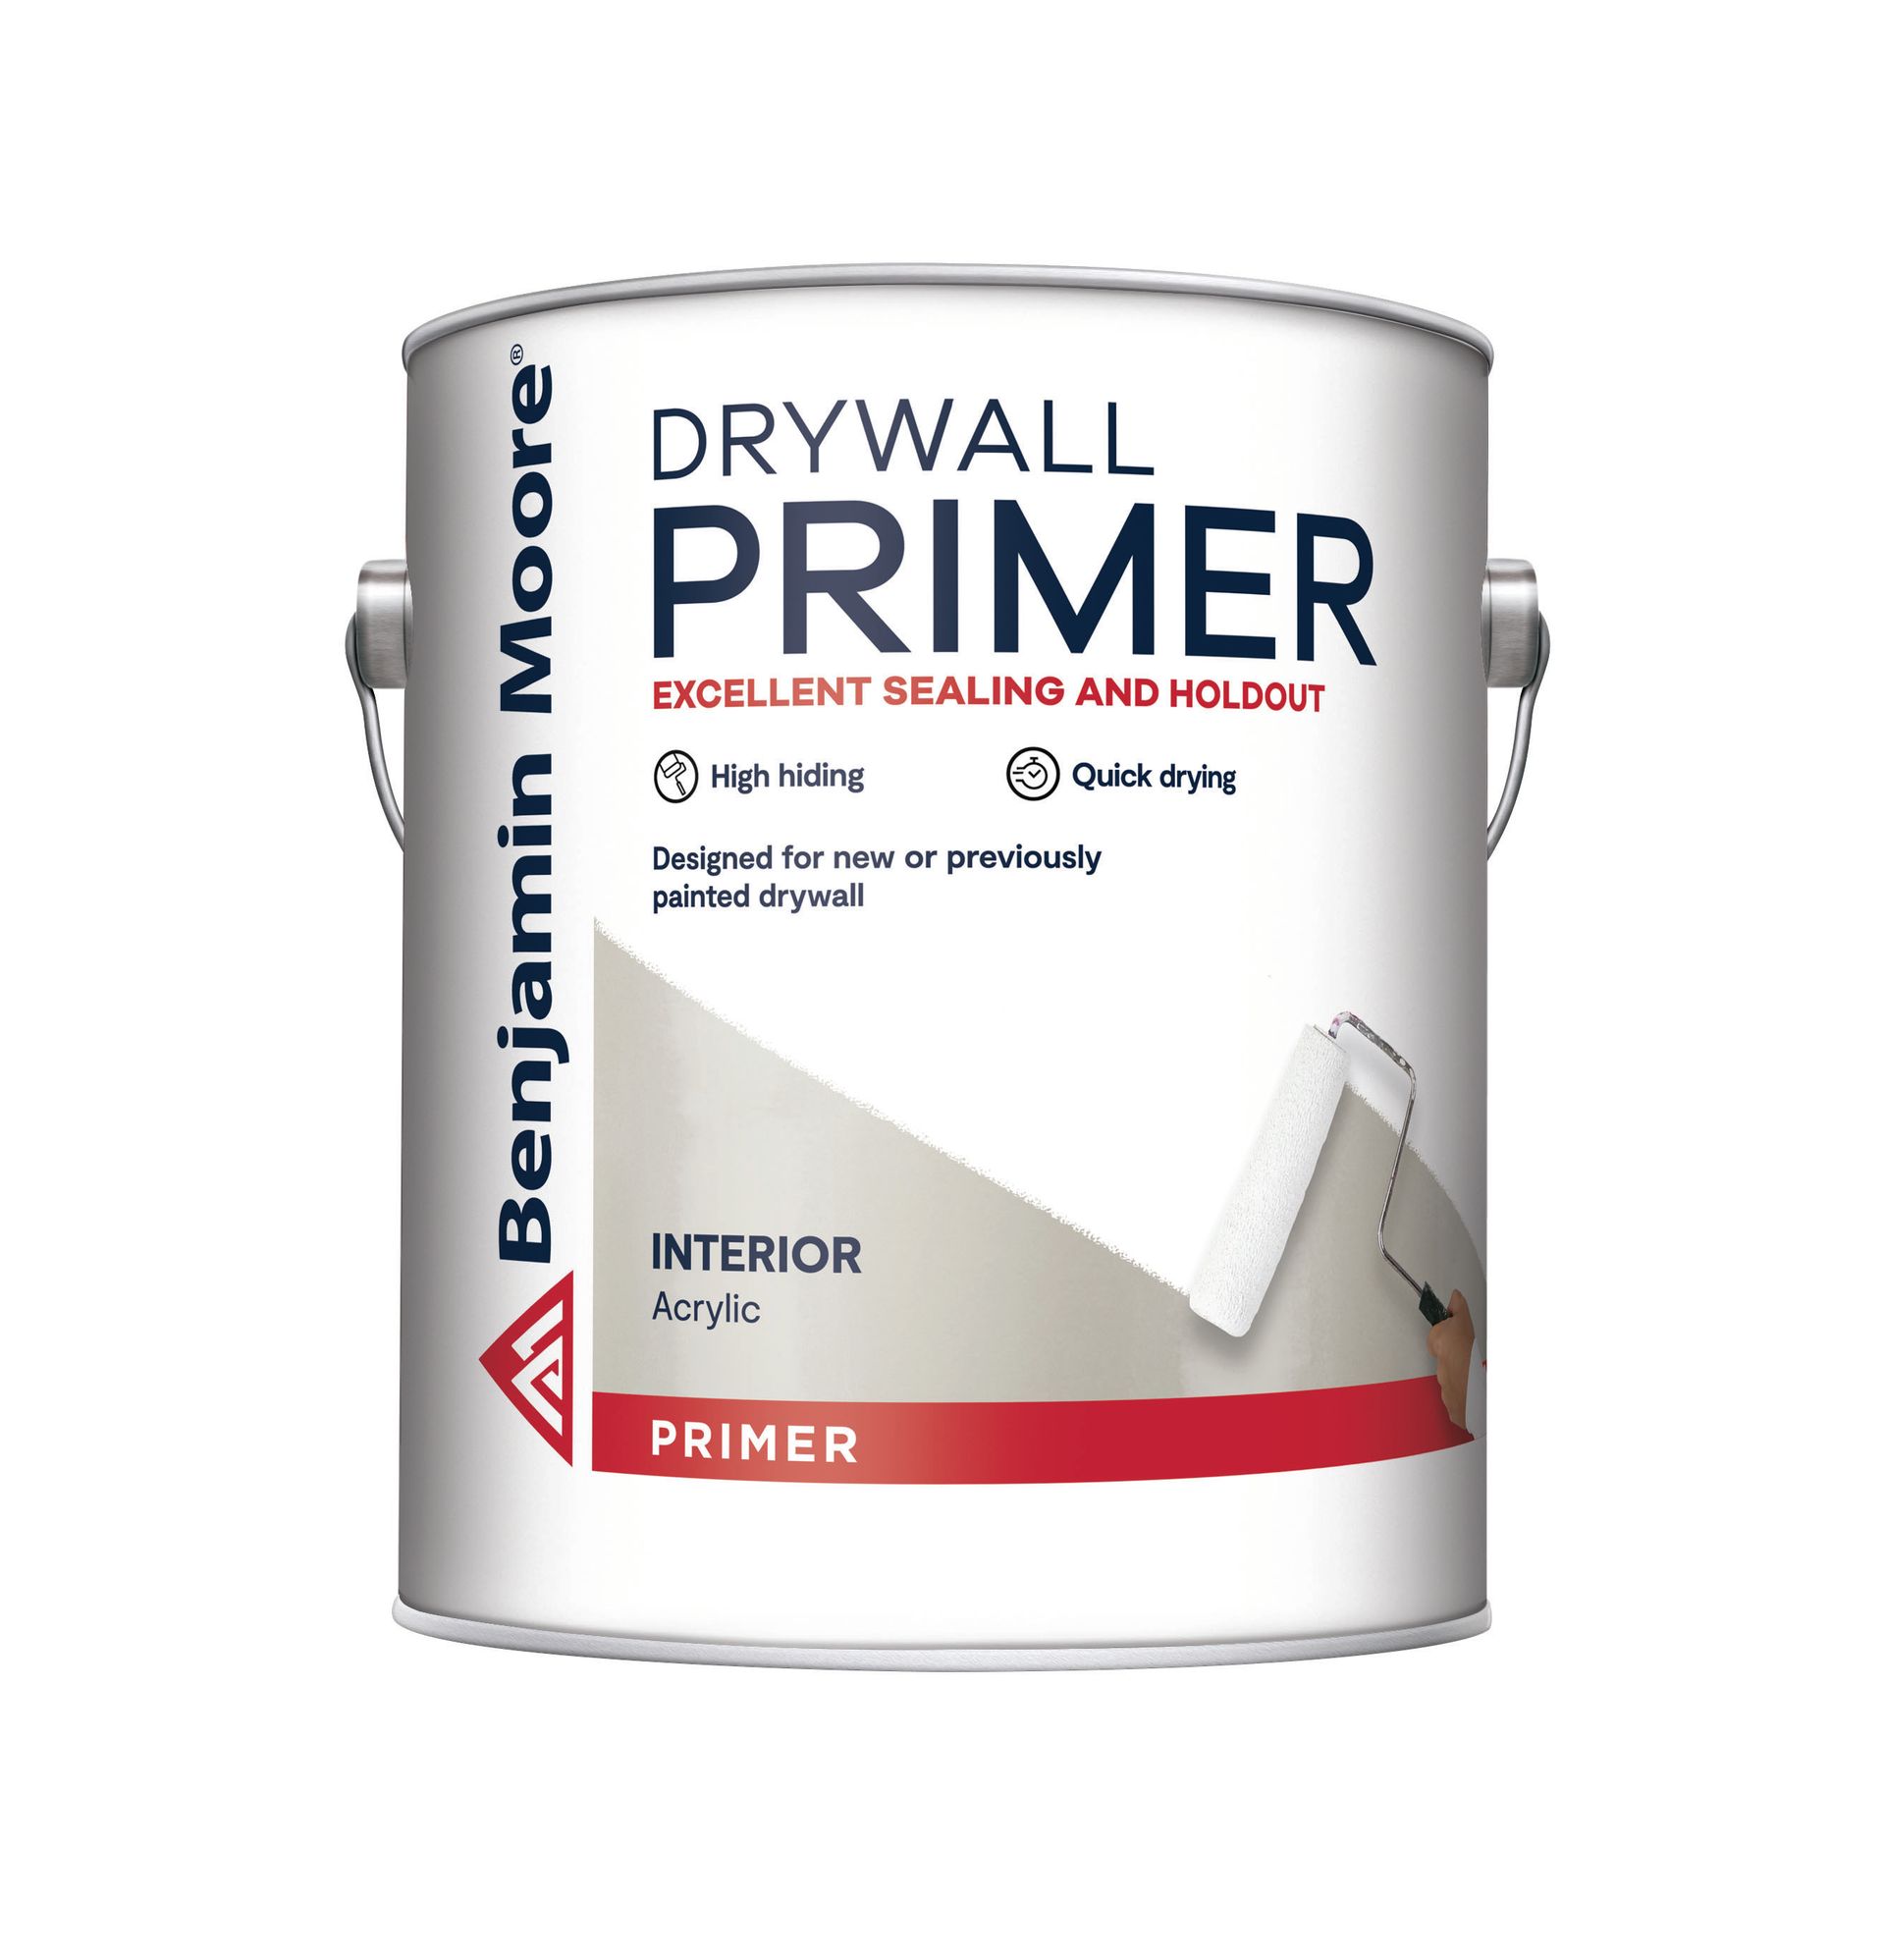 Drywall Primer and Benjamin Moore® paint primer near Omaha, Nebraska (NE) and Des Moines, Iowa (IA)